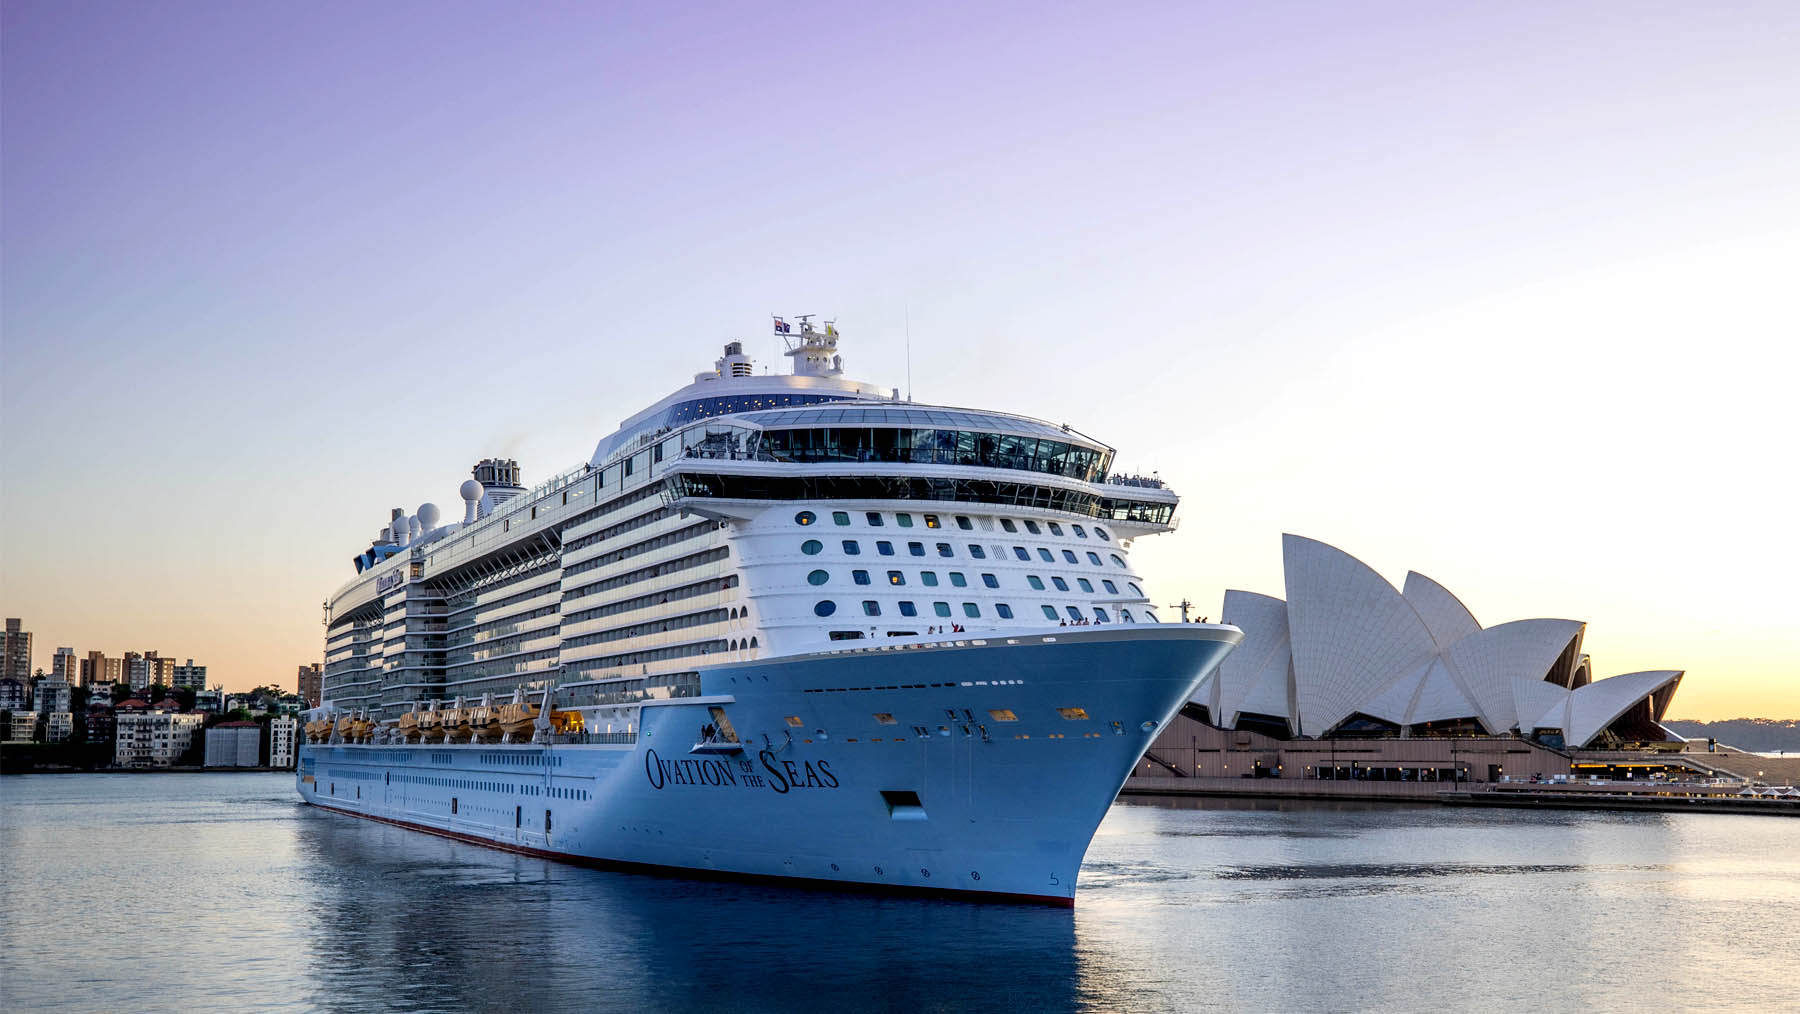 Royal Caribbean Ship gets ready for a cruise around Australia.